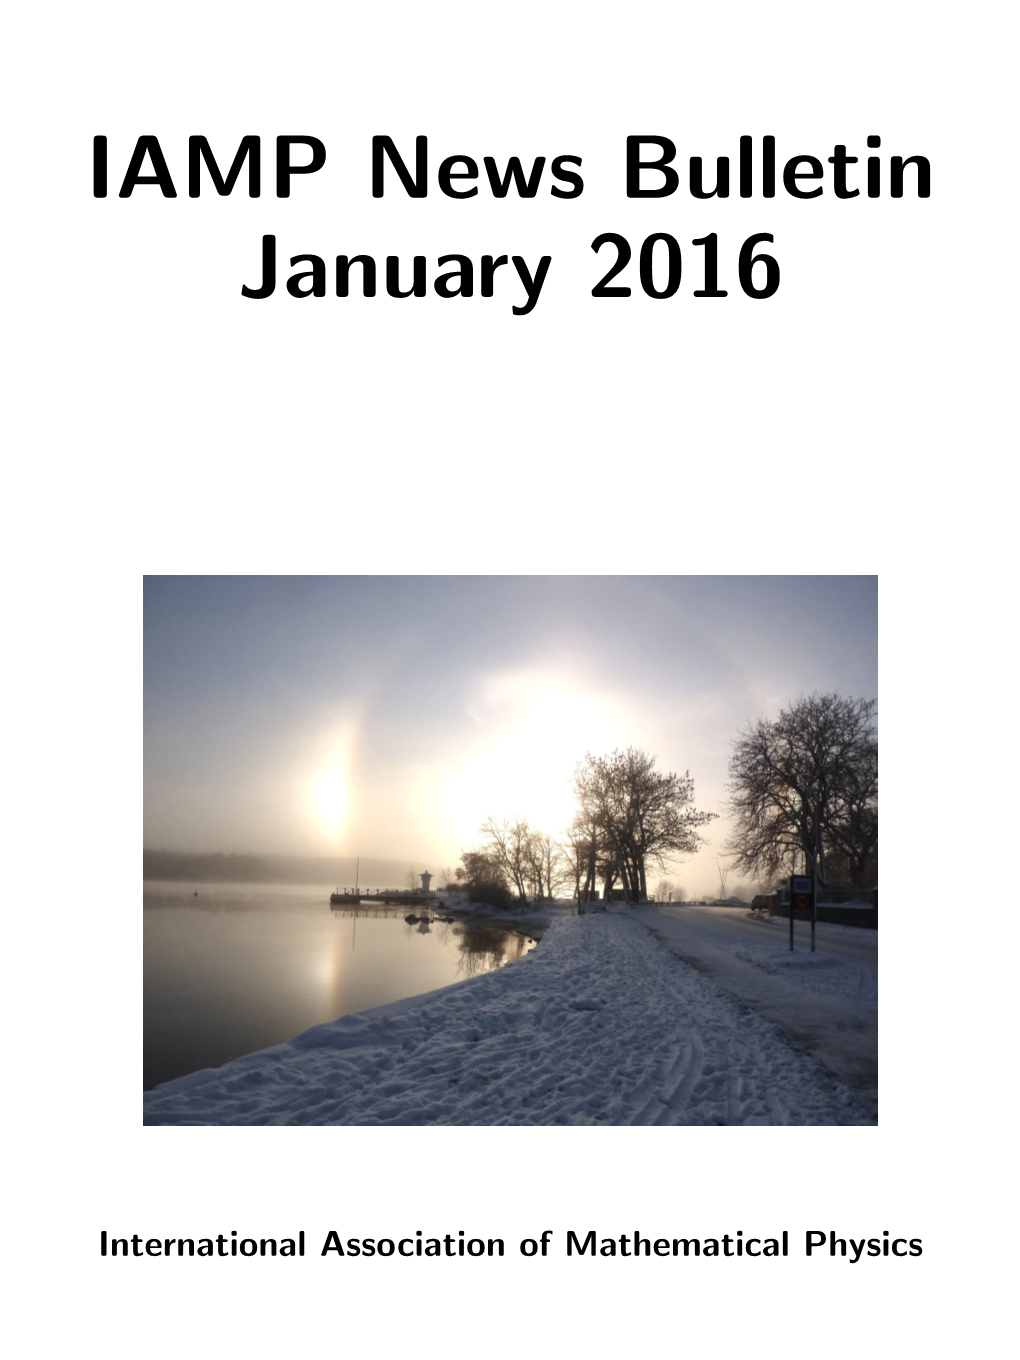 IAMP News Bulletin January 2016